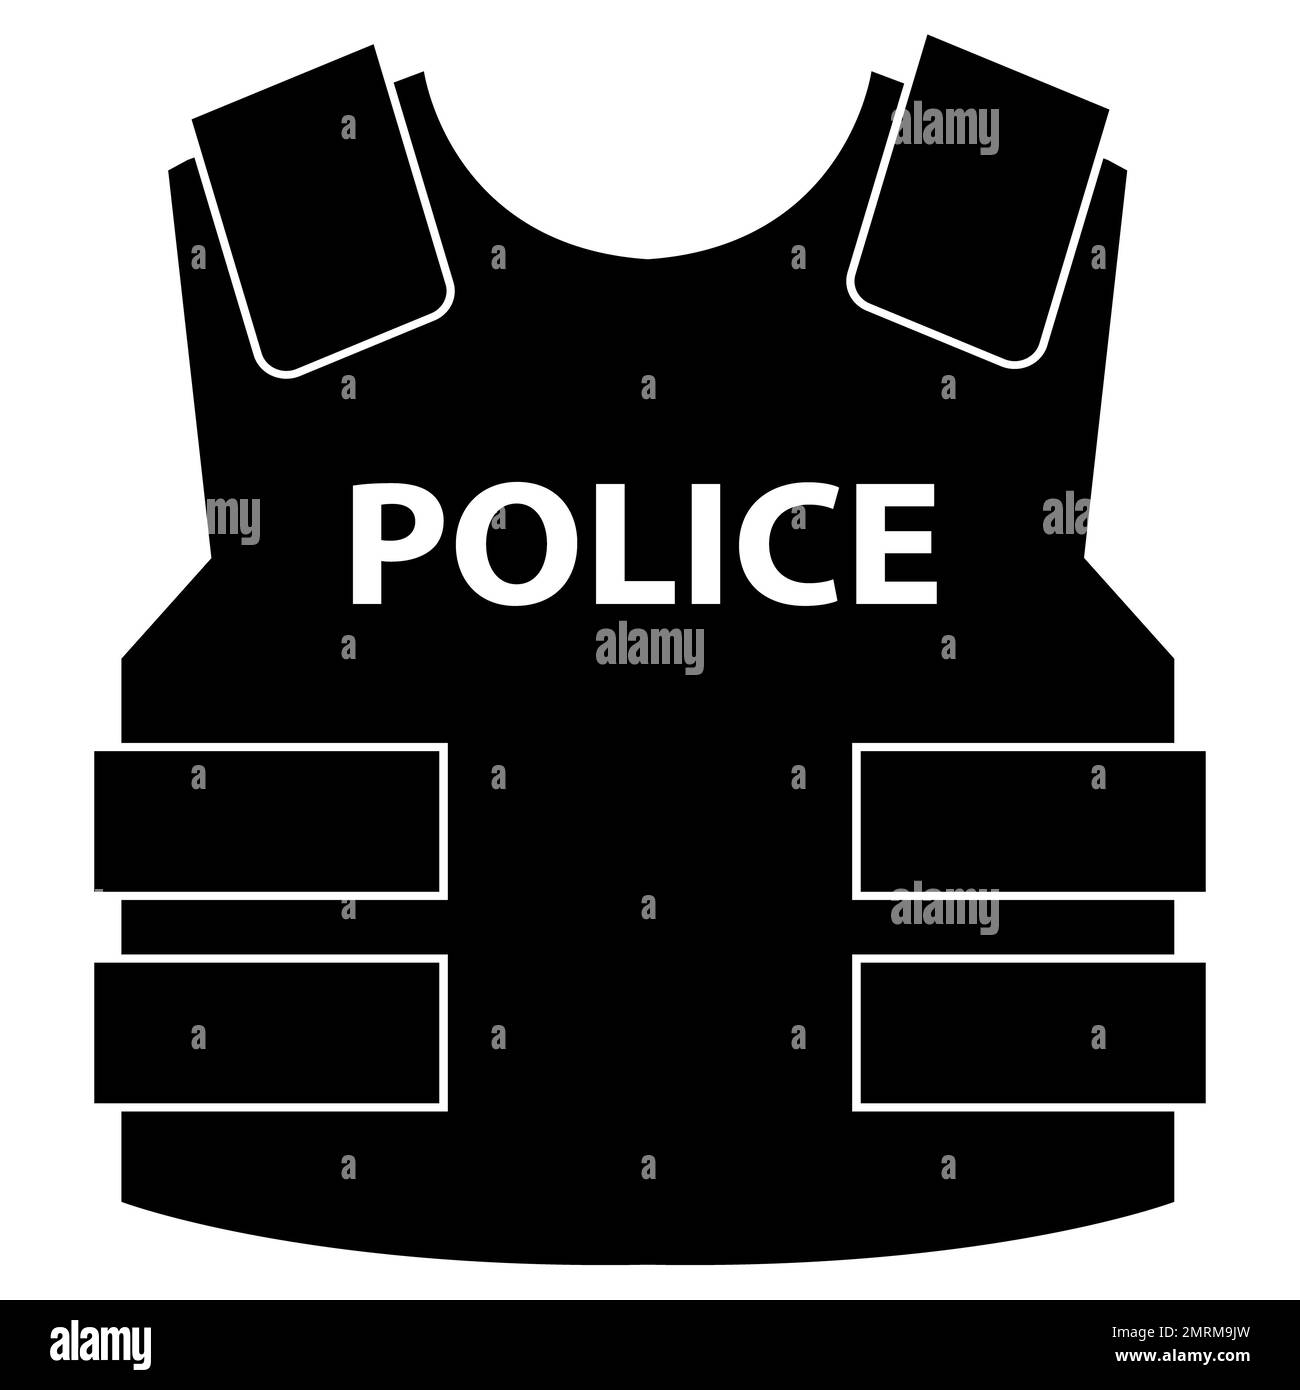 Bullet proof vest Cut Out Stock Images & Pictures - Alamy